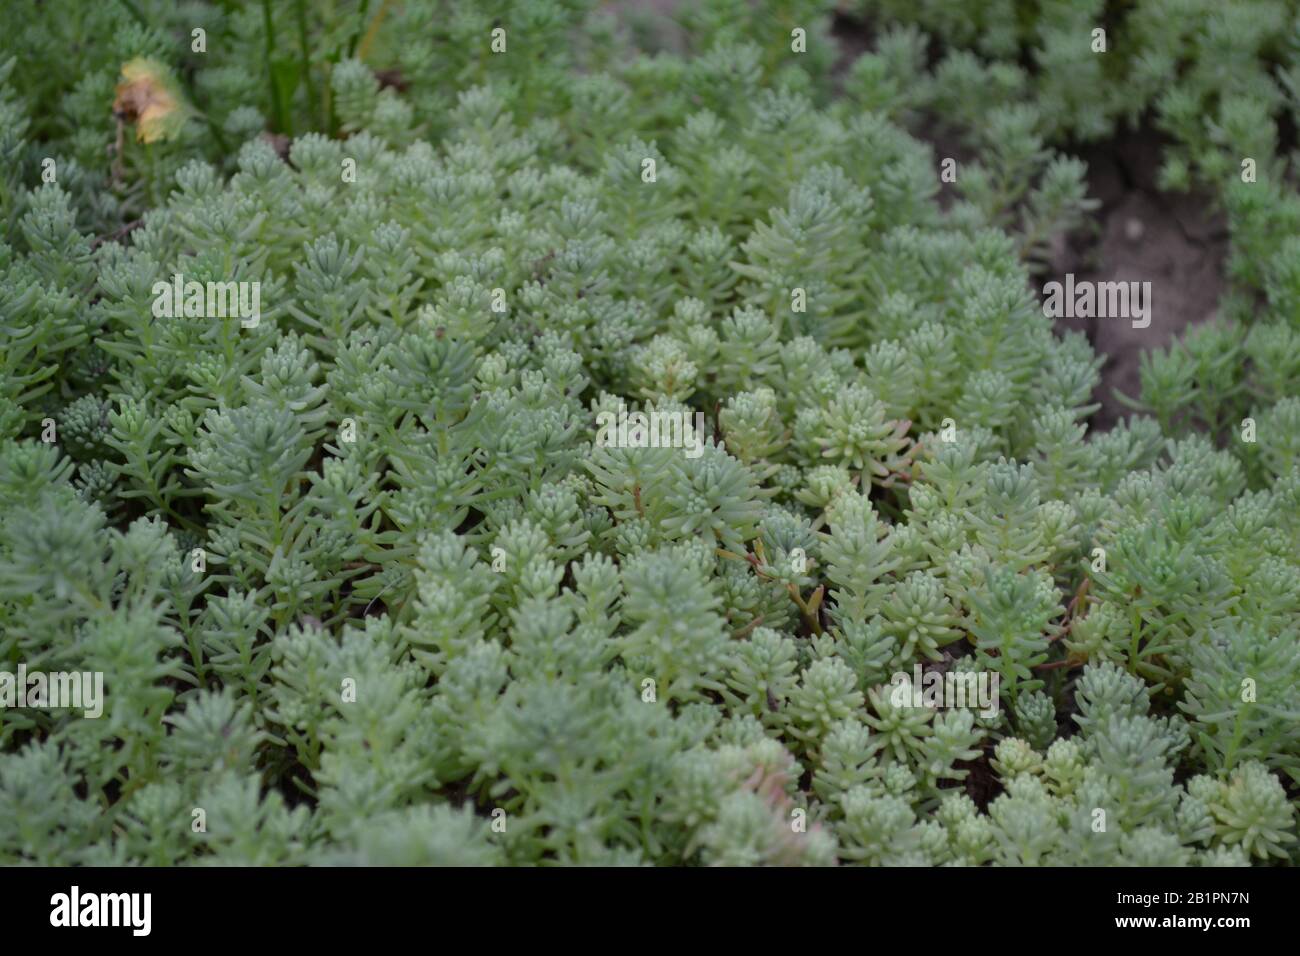 Hare cabbage. Stonecrop.  Sedum. Green moss. Decorative grassy carpet. Green flower bed decoration. Garden. Horizontal Stock Photo